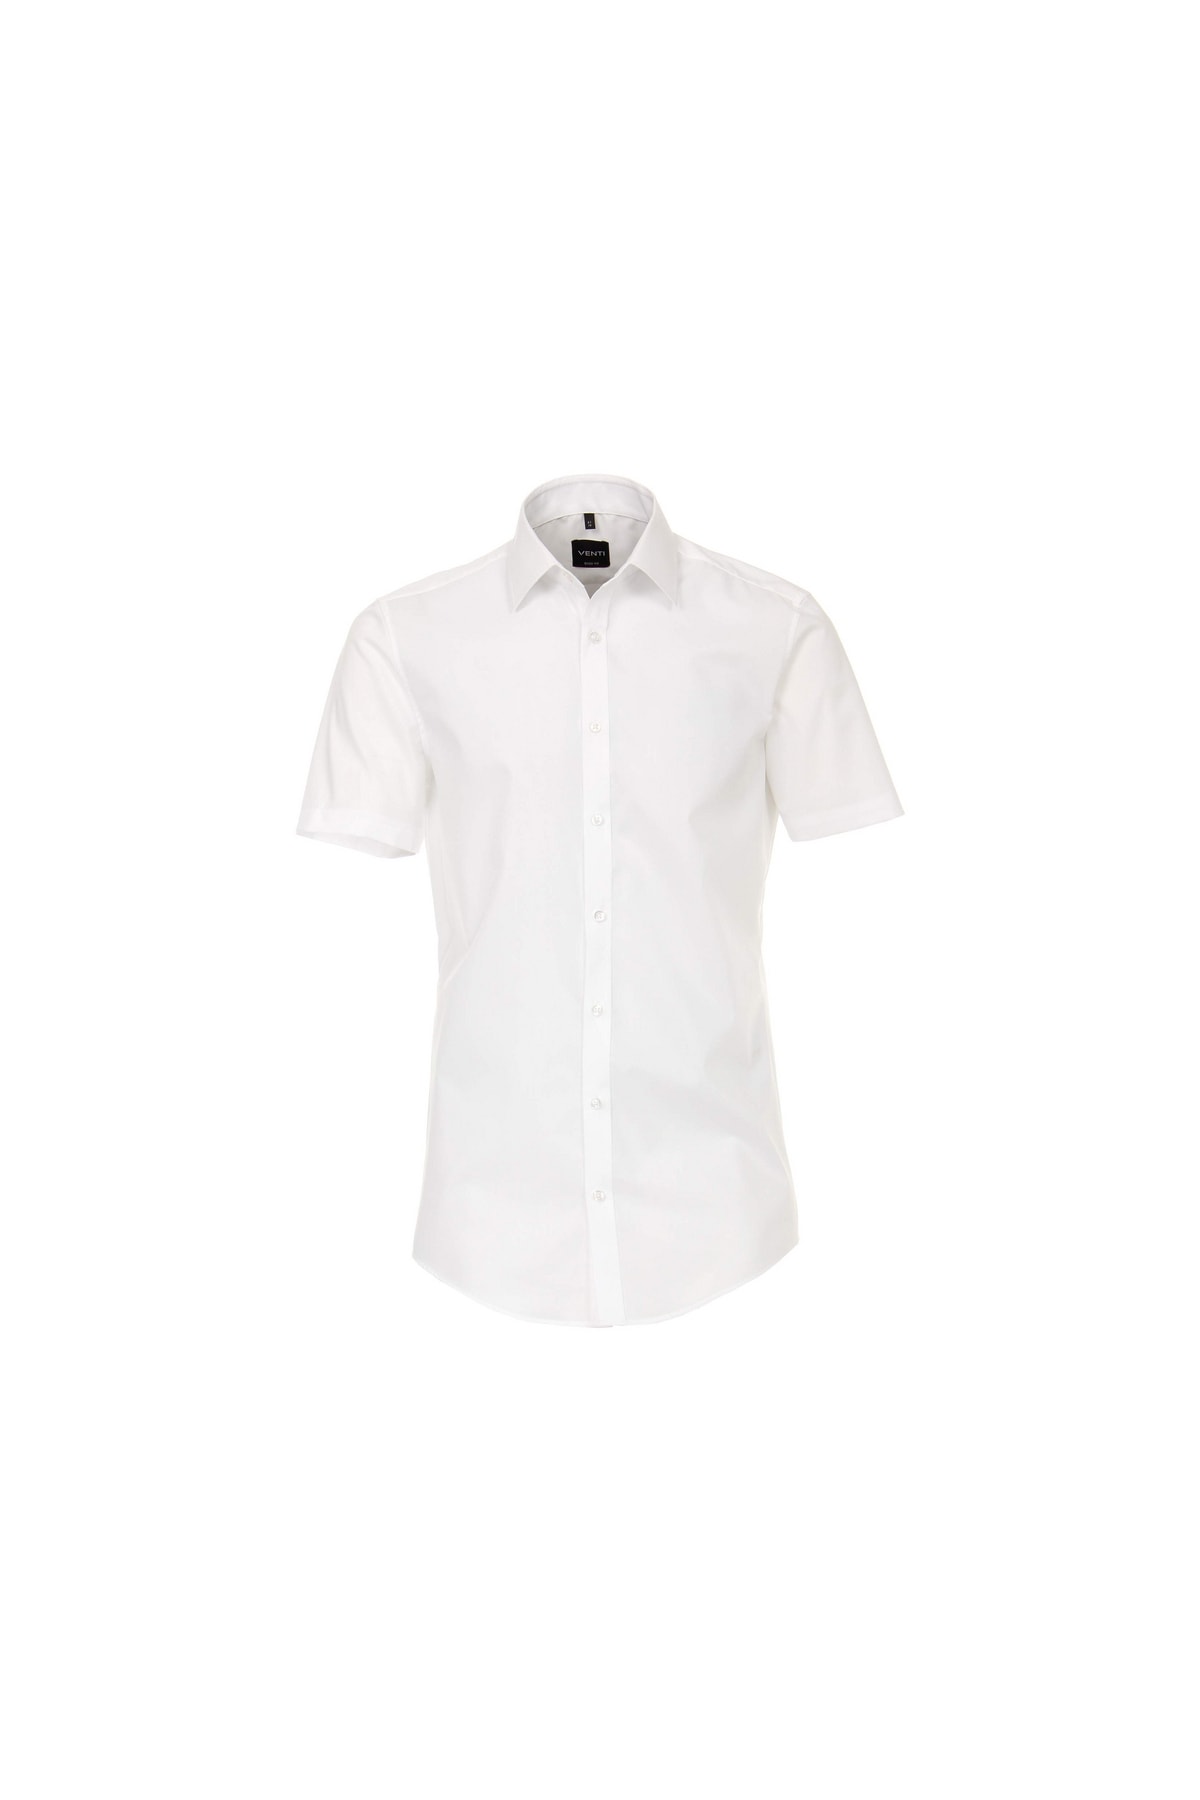 VENTI Hemd Weiß Regular Fit Fast ausverkauft